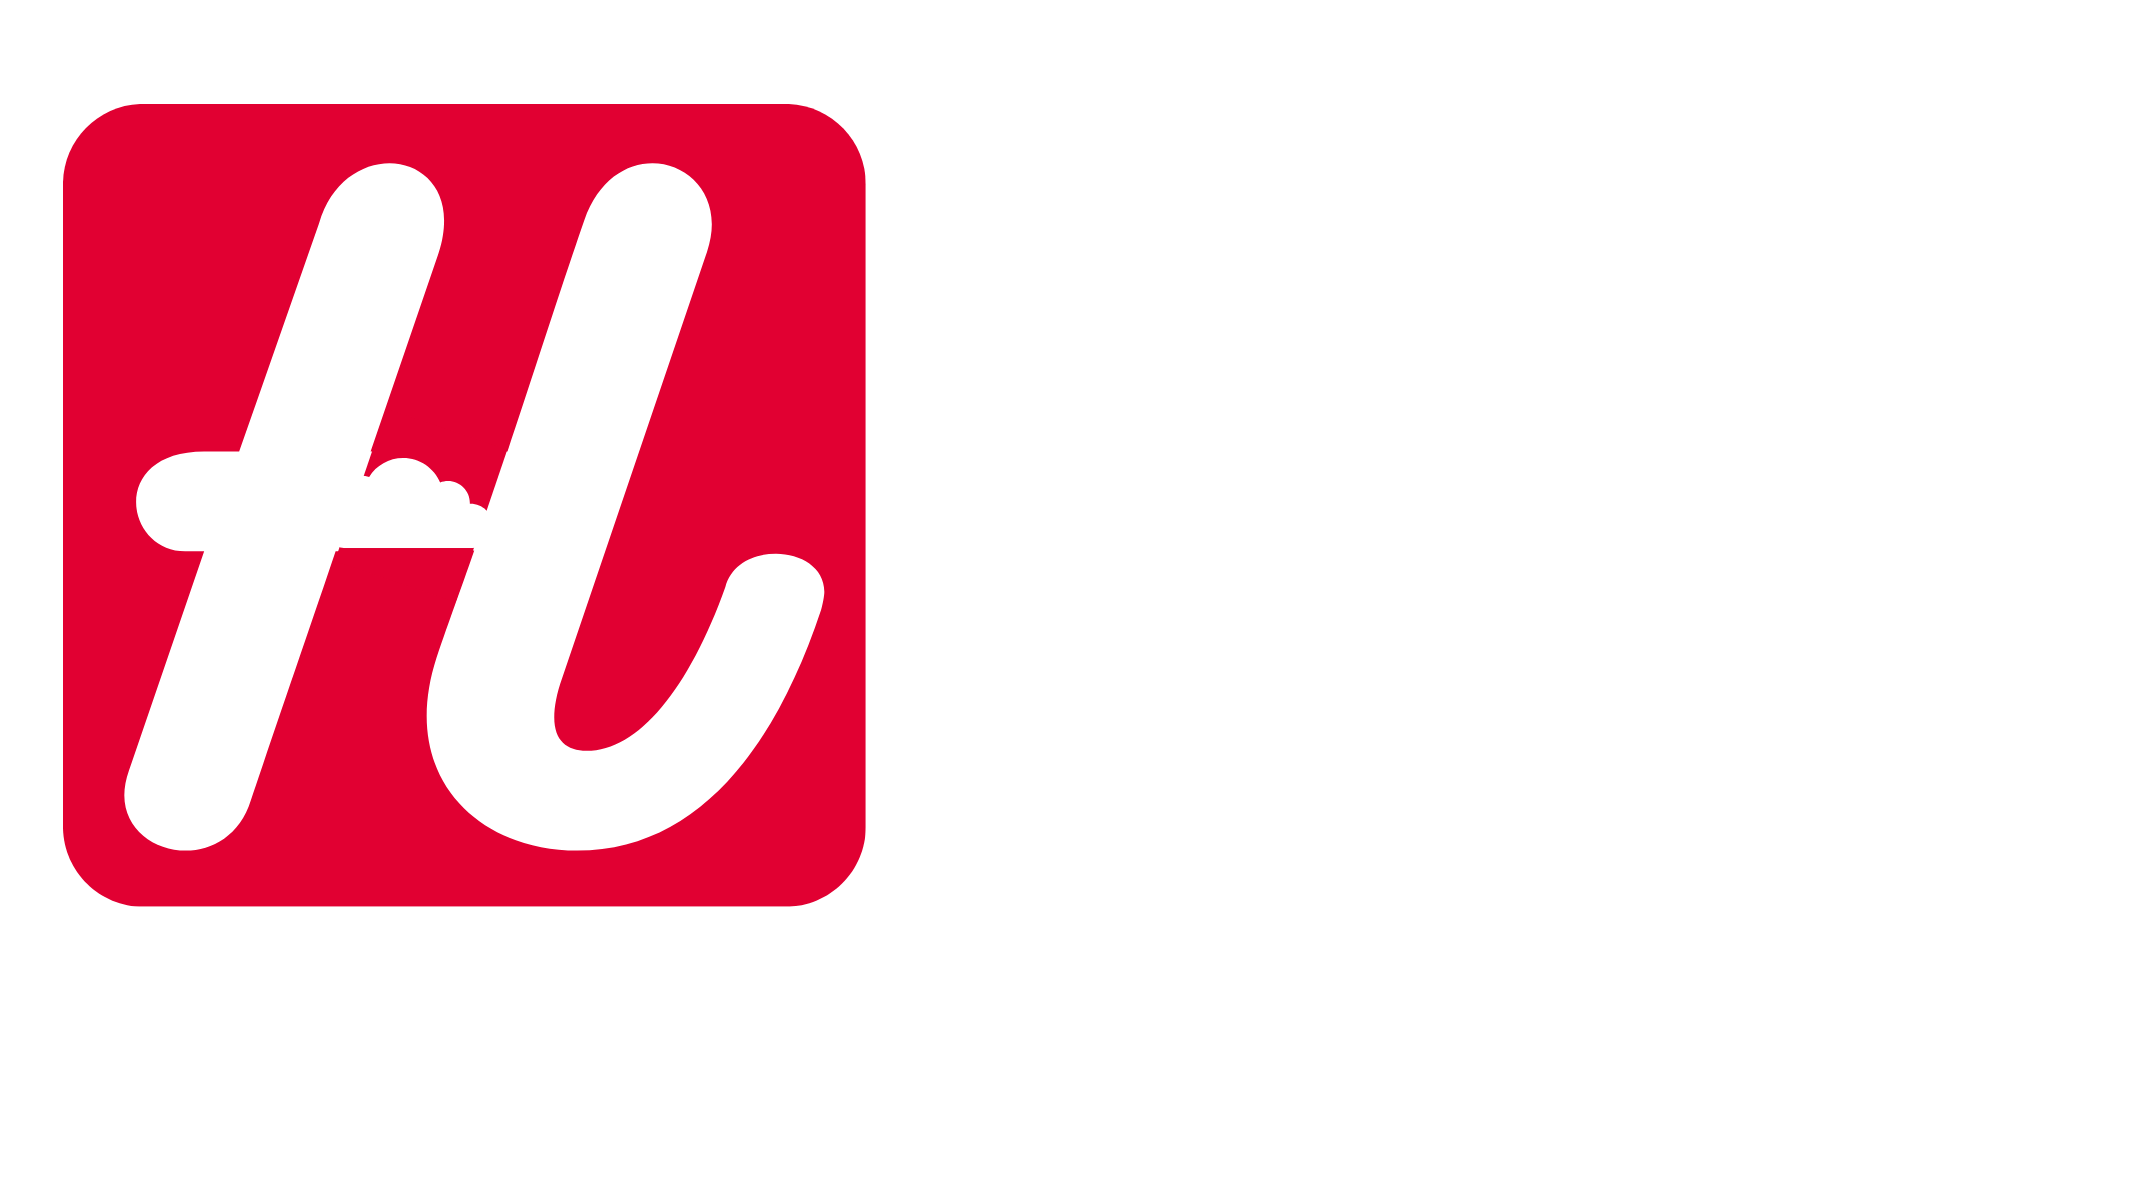 Hyper Cloud Digital Solutions